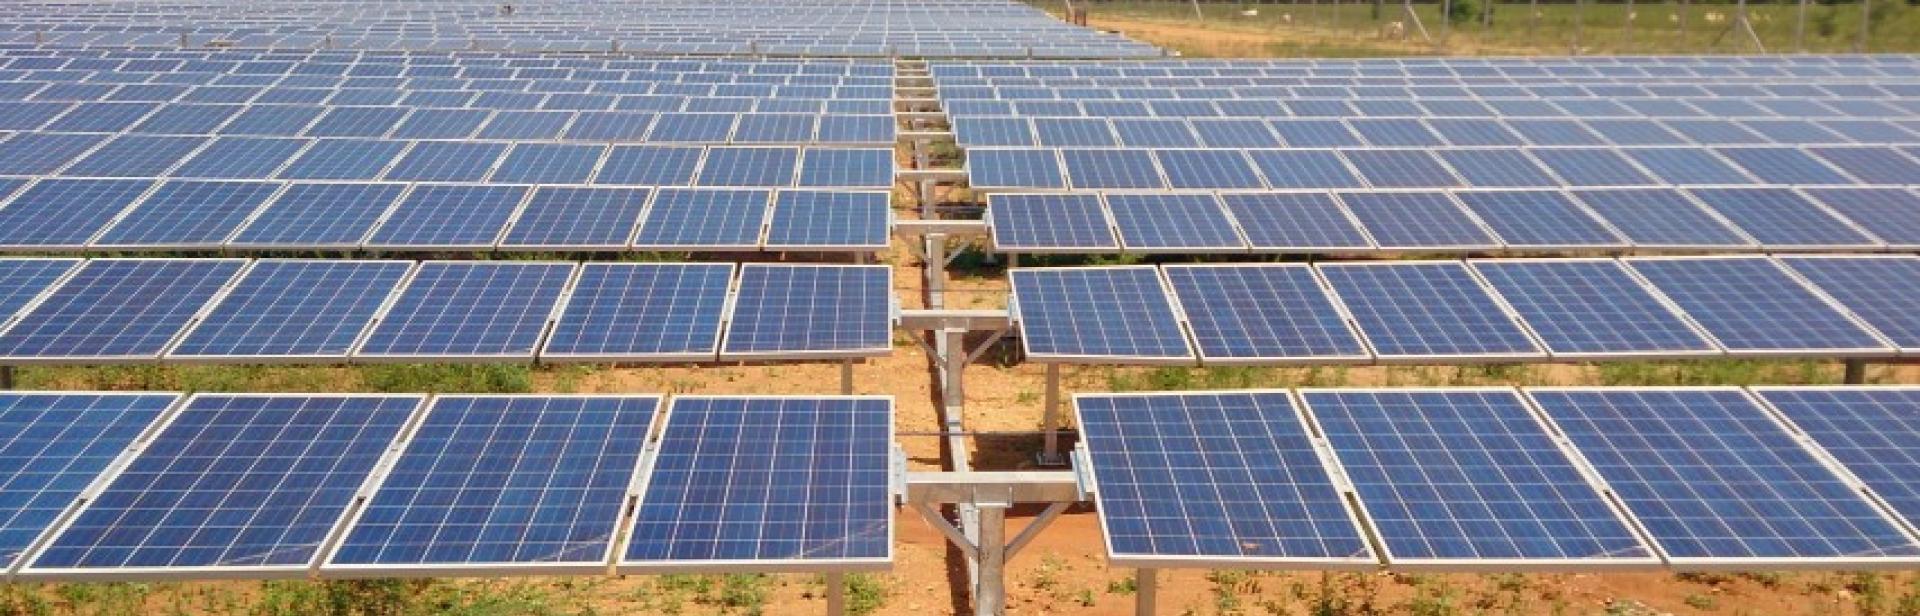 Solar panel farm in Tamil Nadu